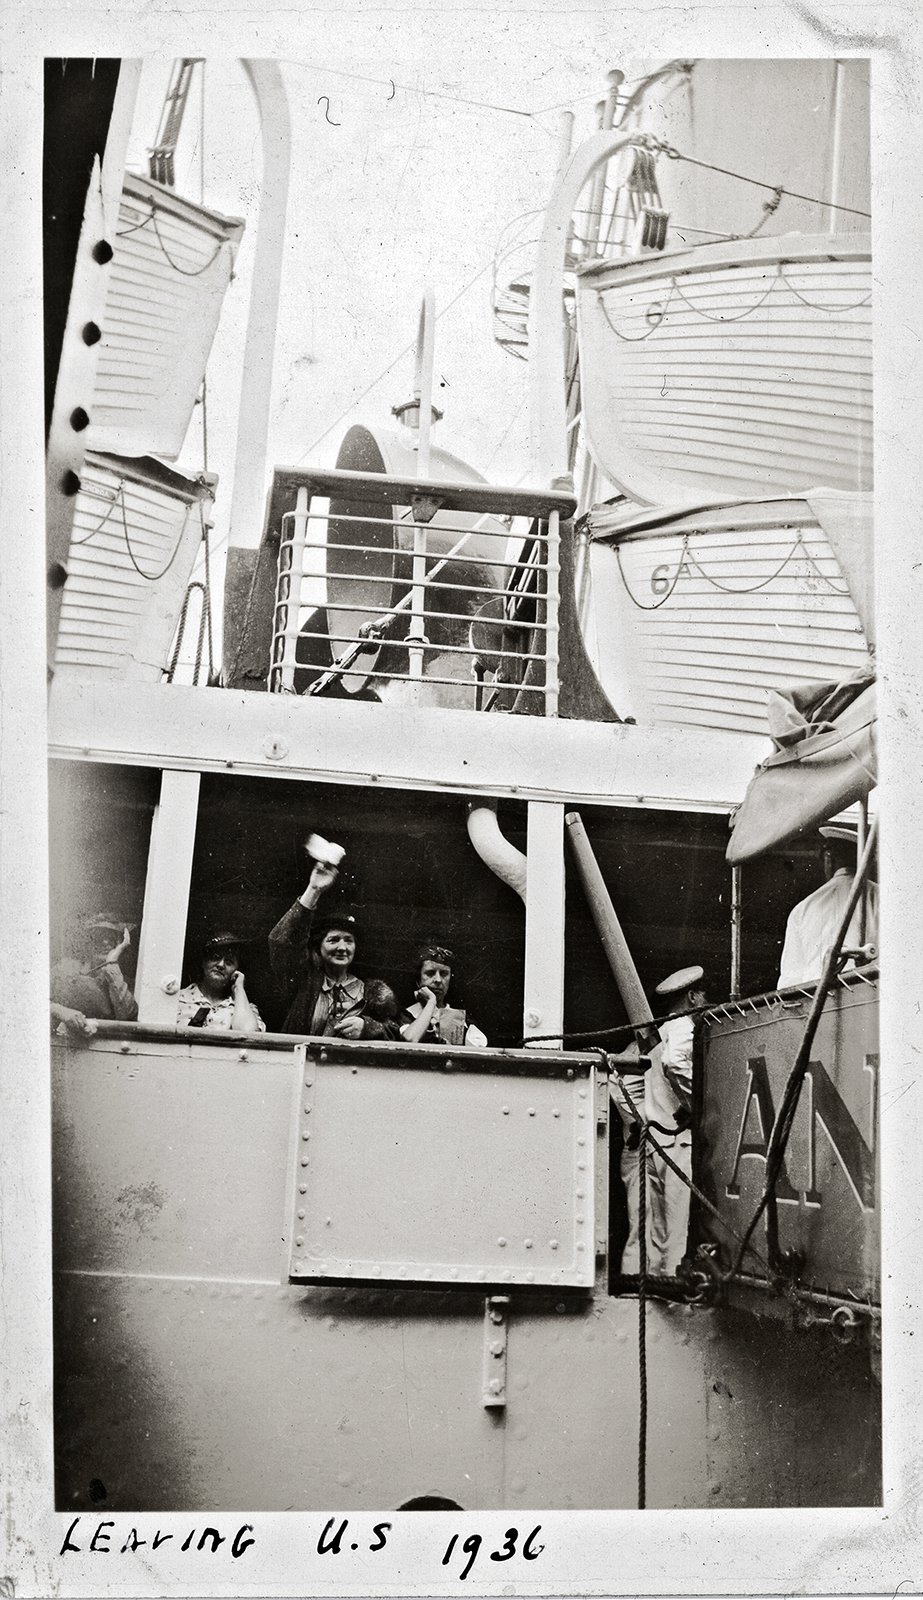 View of boat leaving docks, 1936.